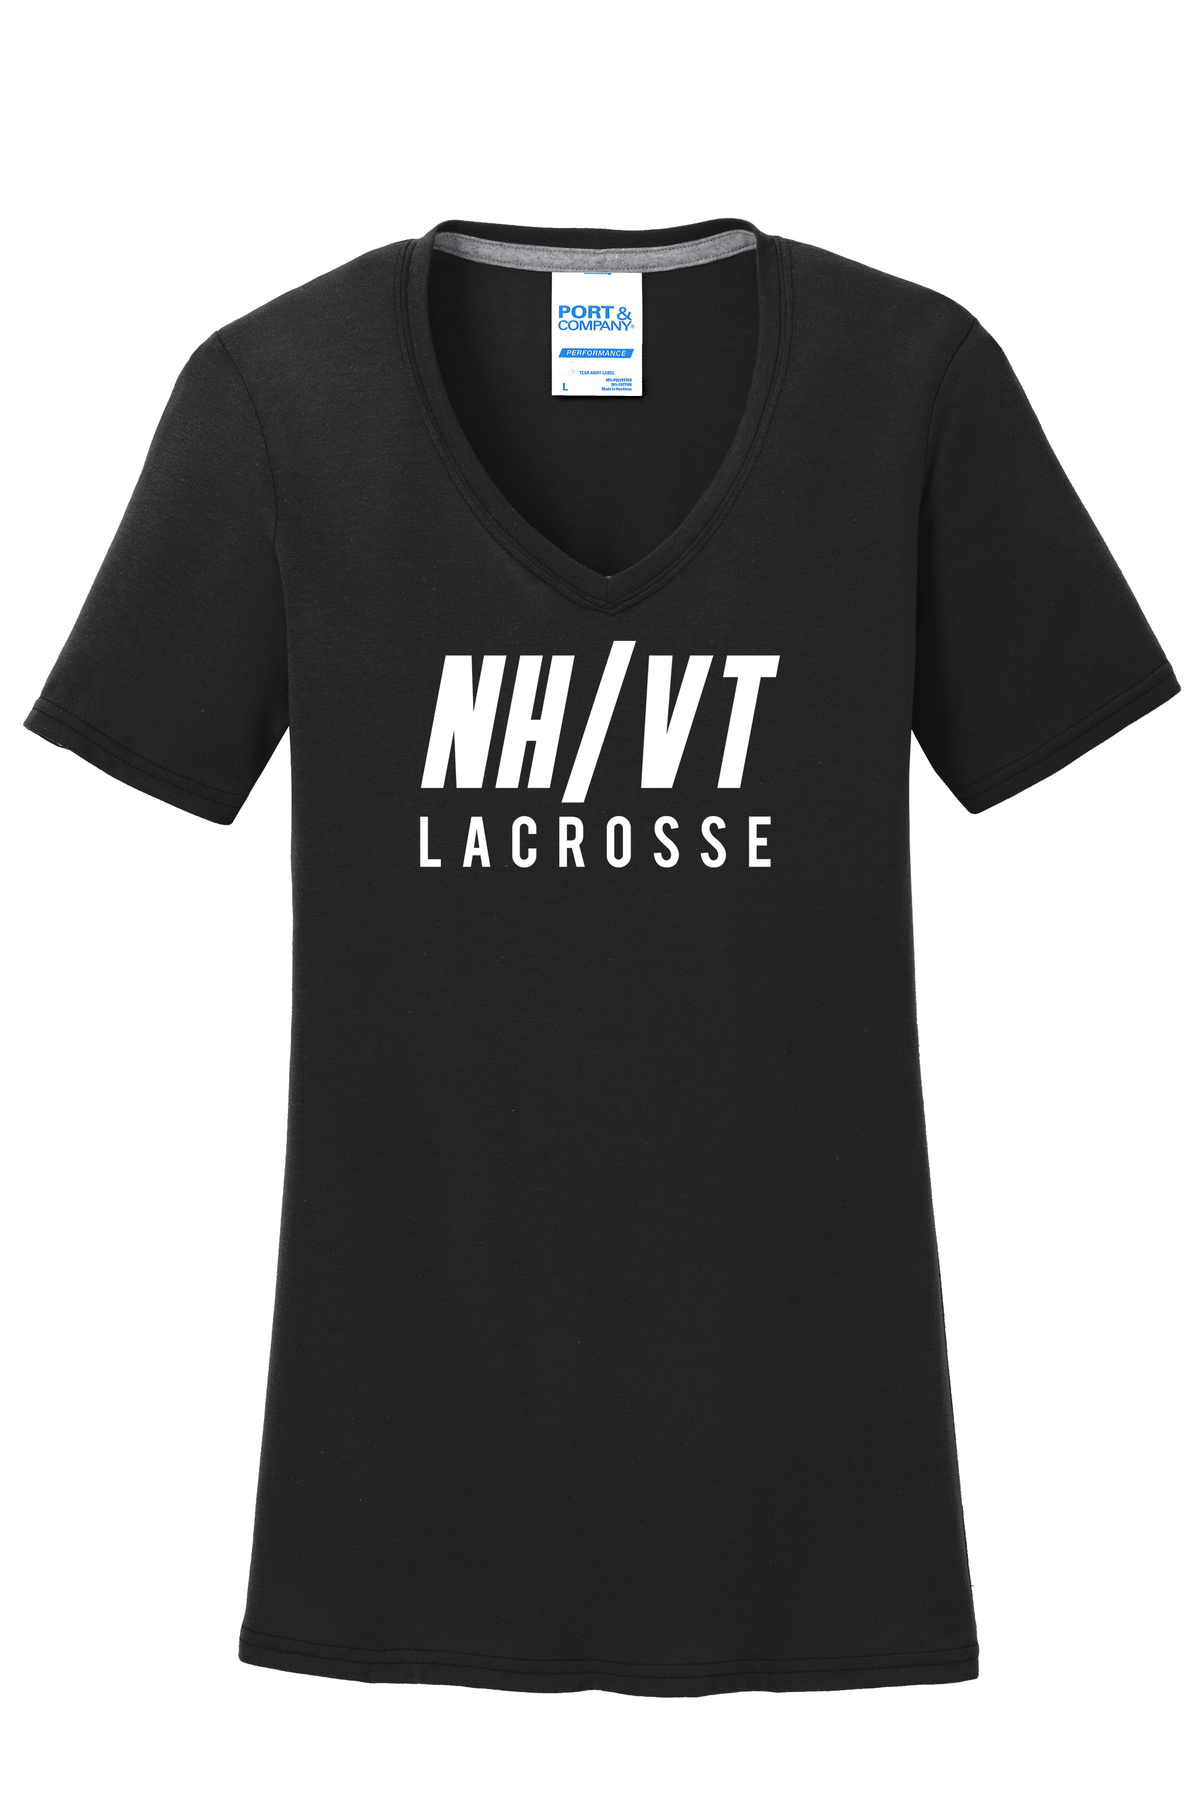 NH/VT Lacrosse Women's T-Shirt